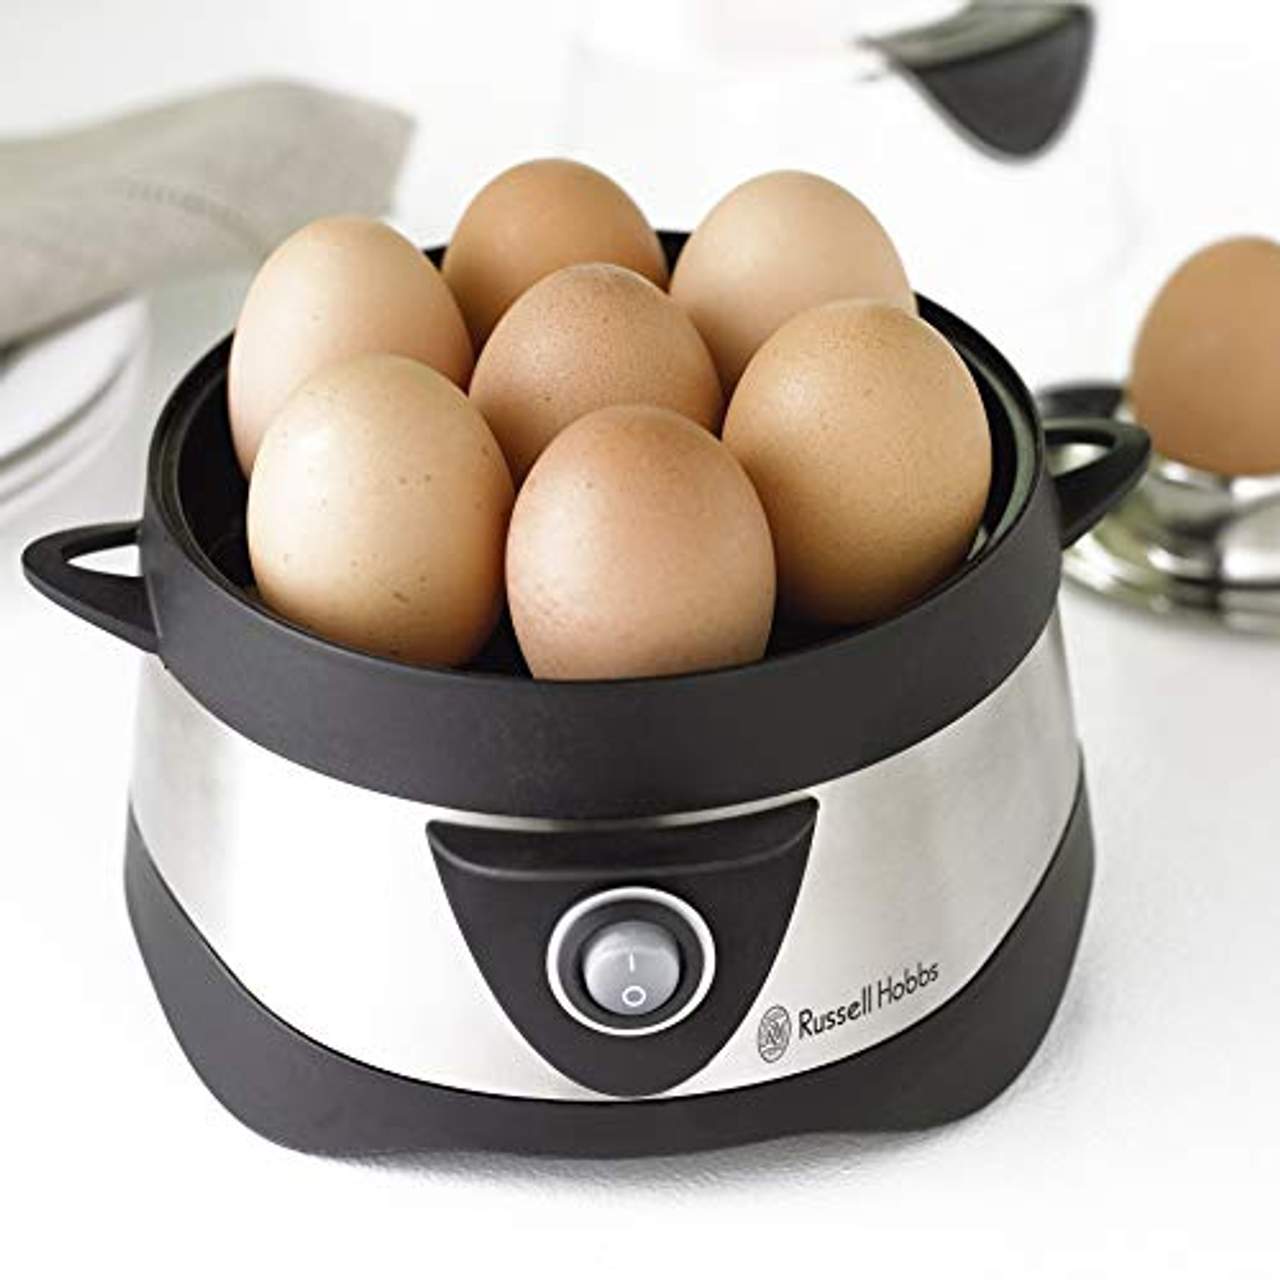 Russell Hobbs Eierkocher 1 bis 7 gekochte oder 3 gedämpfte Eier